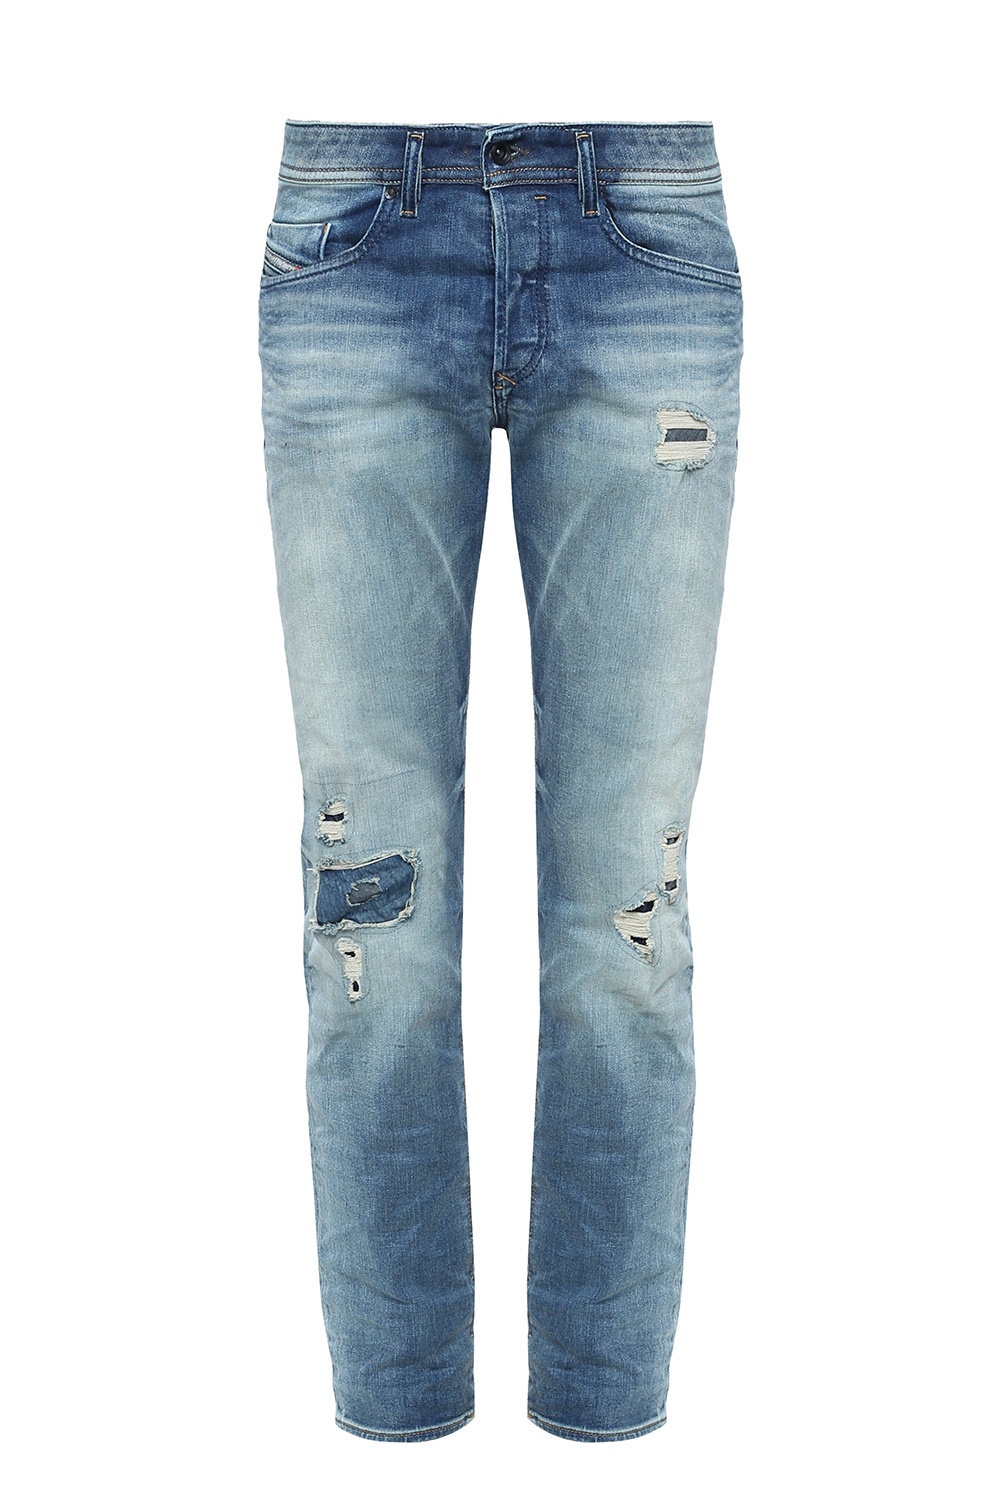 'Buster' skinny jeans Diesel - Vitkac Canada